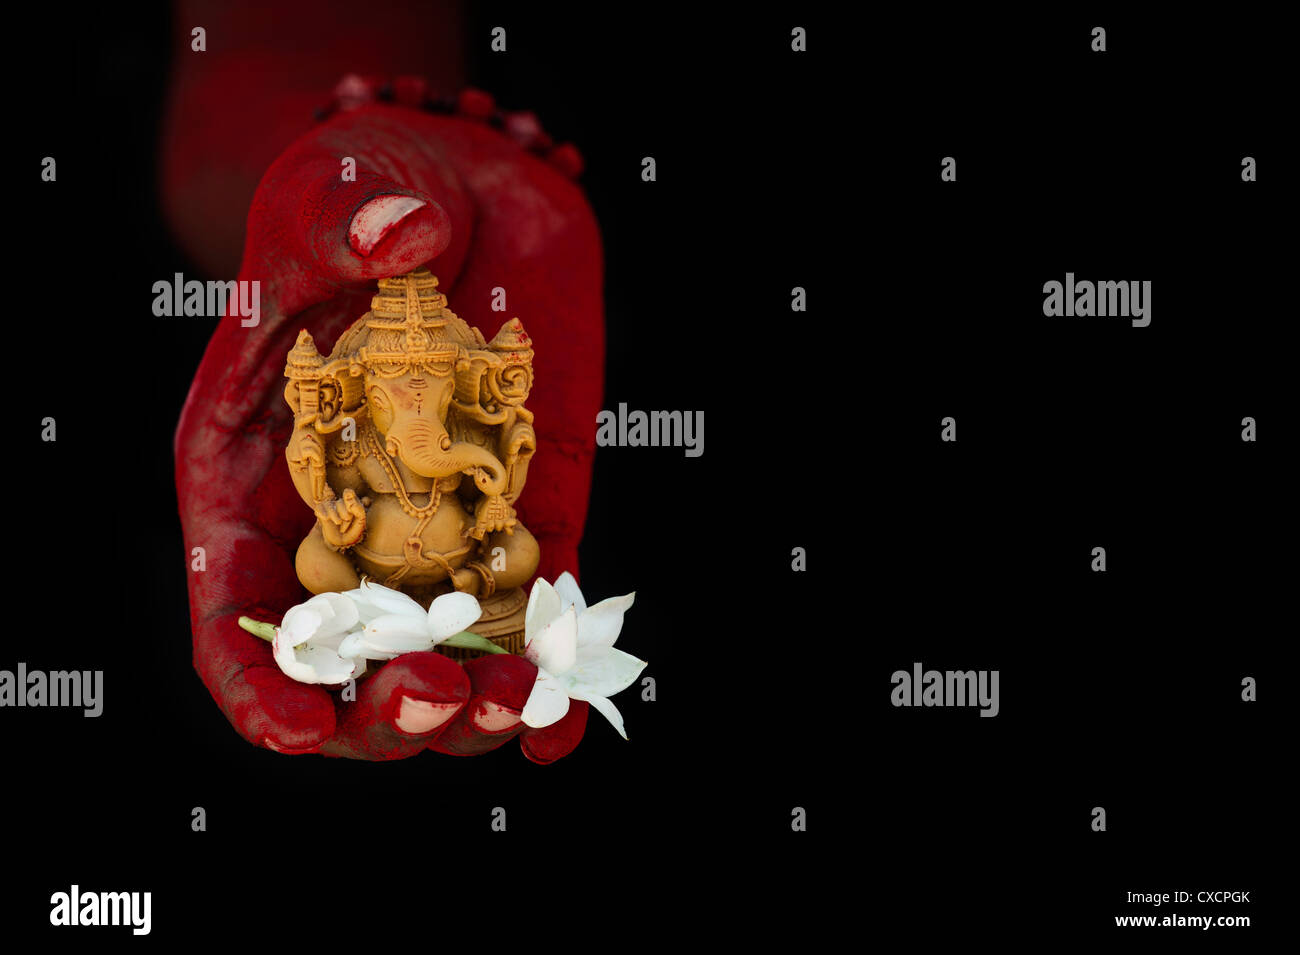 Hindu Elephant God. Red powder covered indian mans hand holding Lord Ganesha statue and jasmine flowers against black background Stock Photo